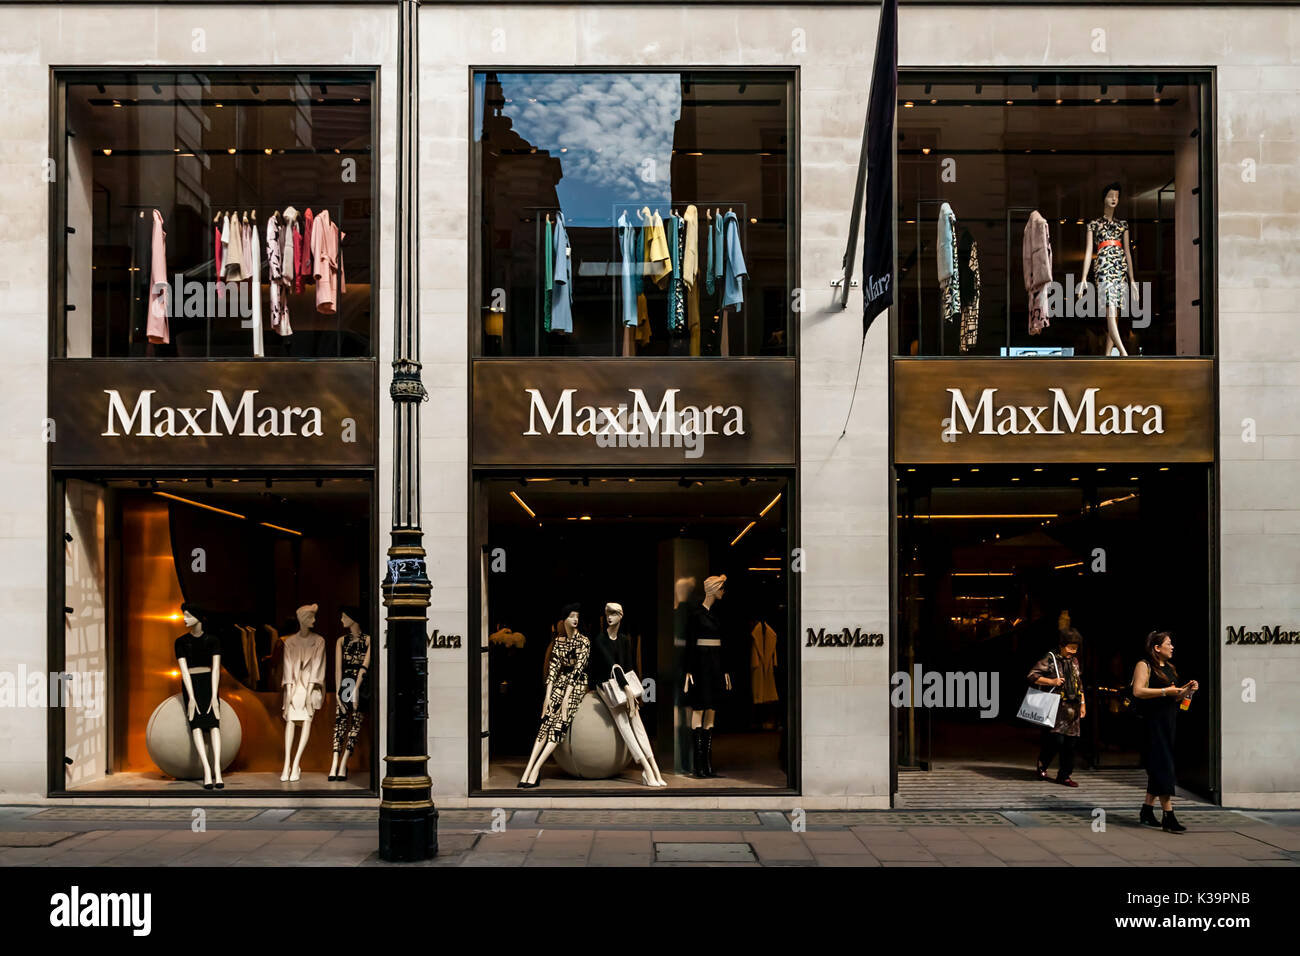 MaxMara Clothing Store, Old Bond Street, London, UK Stock Photo